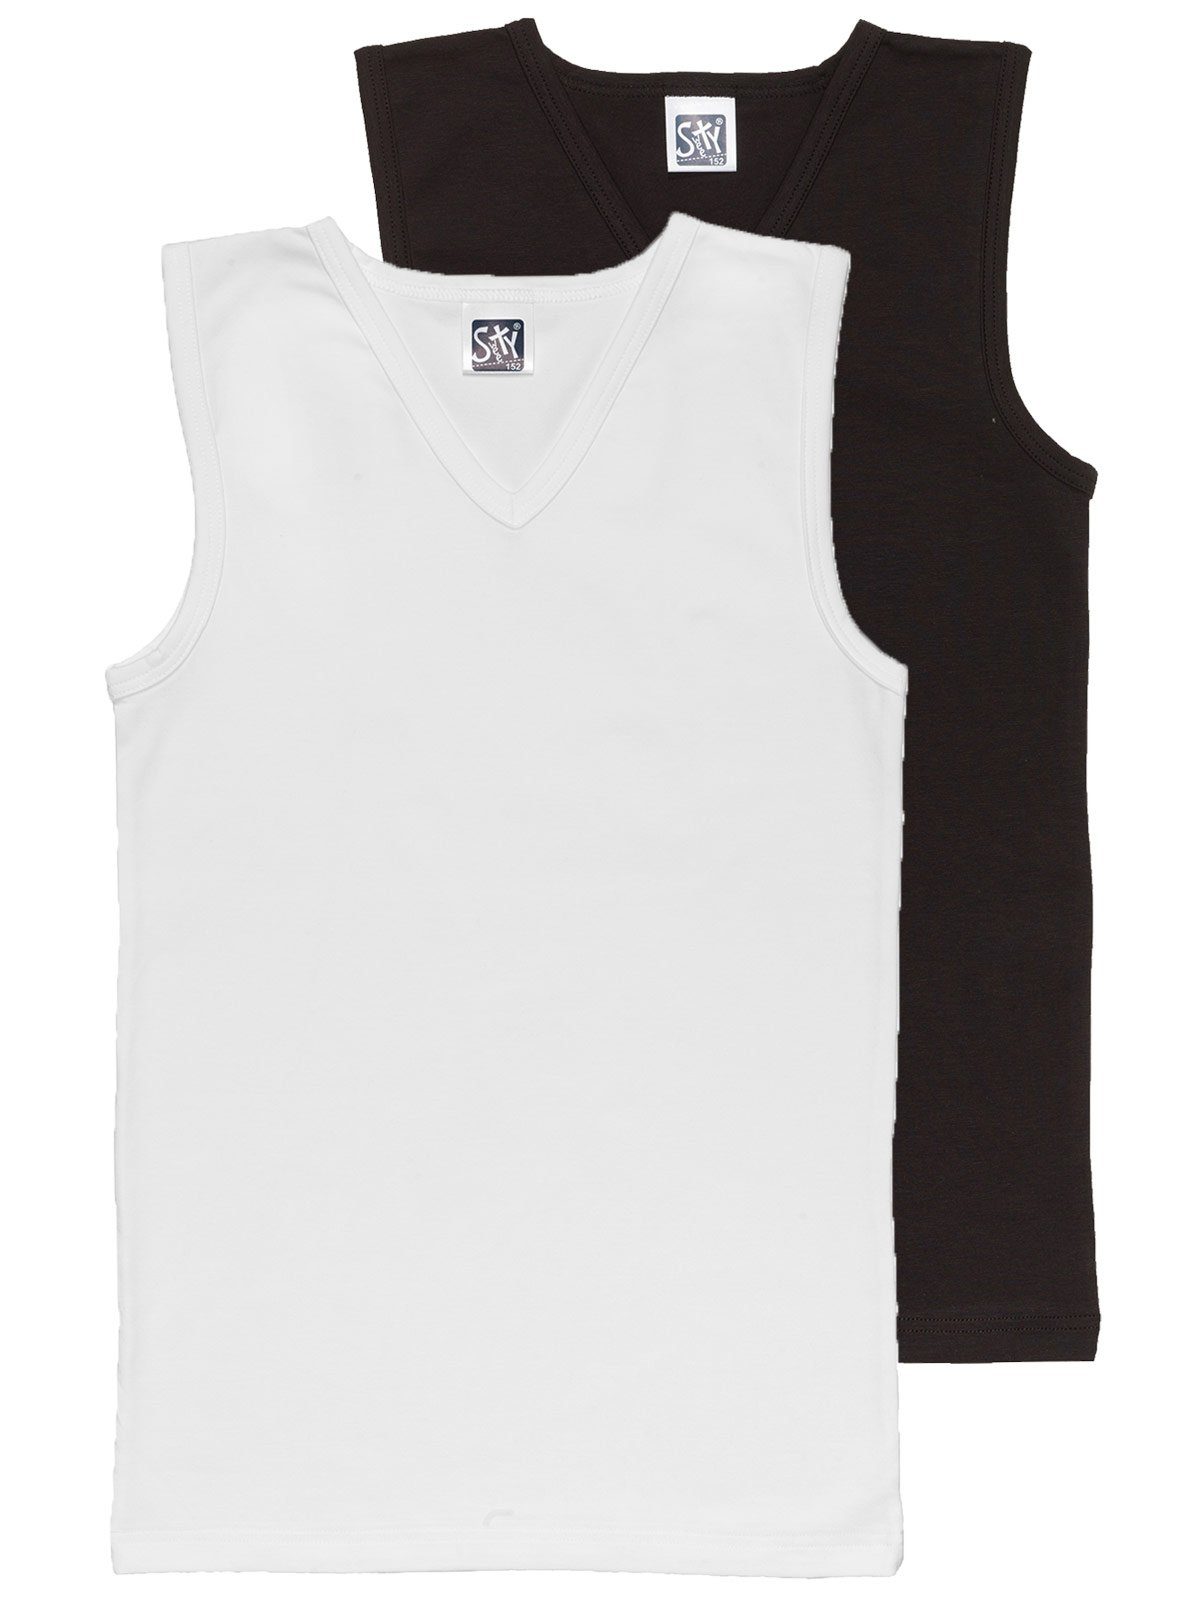 Sparpack for 2-St) Single Knaben City weiss Jersey Markenqualität (Spar-Set, schwarz Unterhemd Kids Sweety hohe 2er Shirt